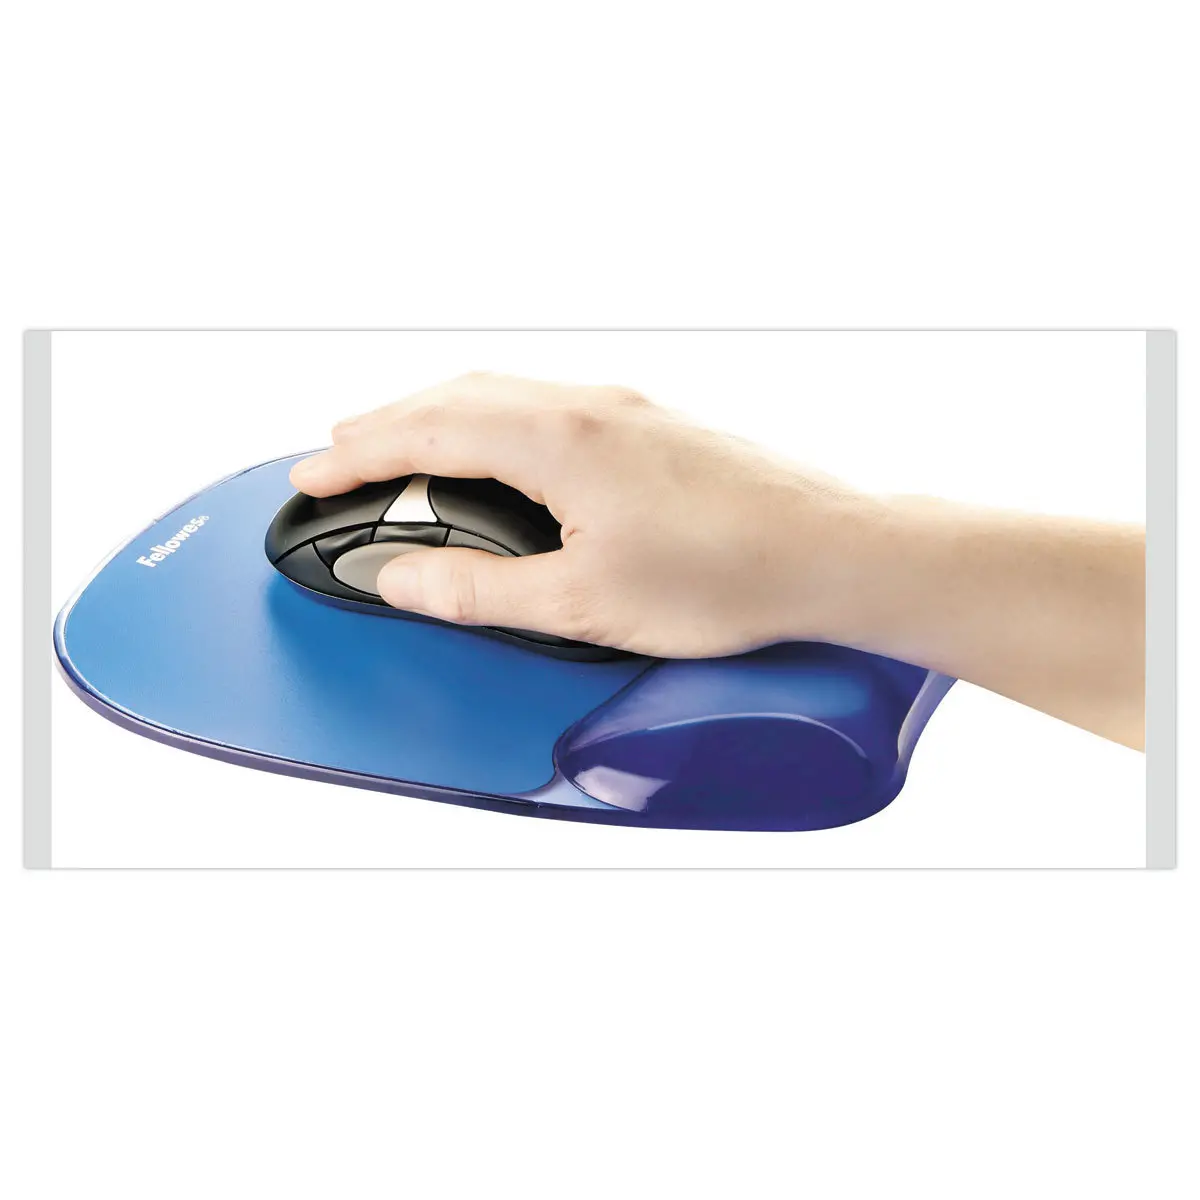 Tapis de souris repose poignet ergonomique Haute Qualité gel et